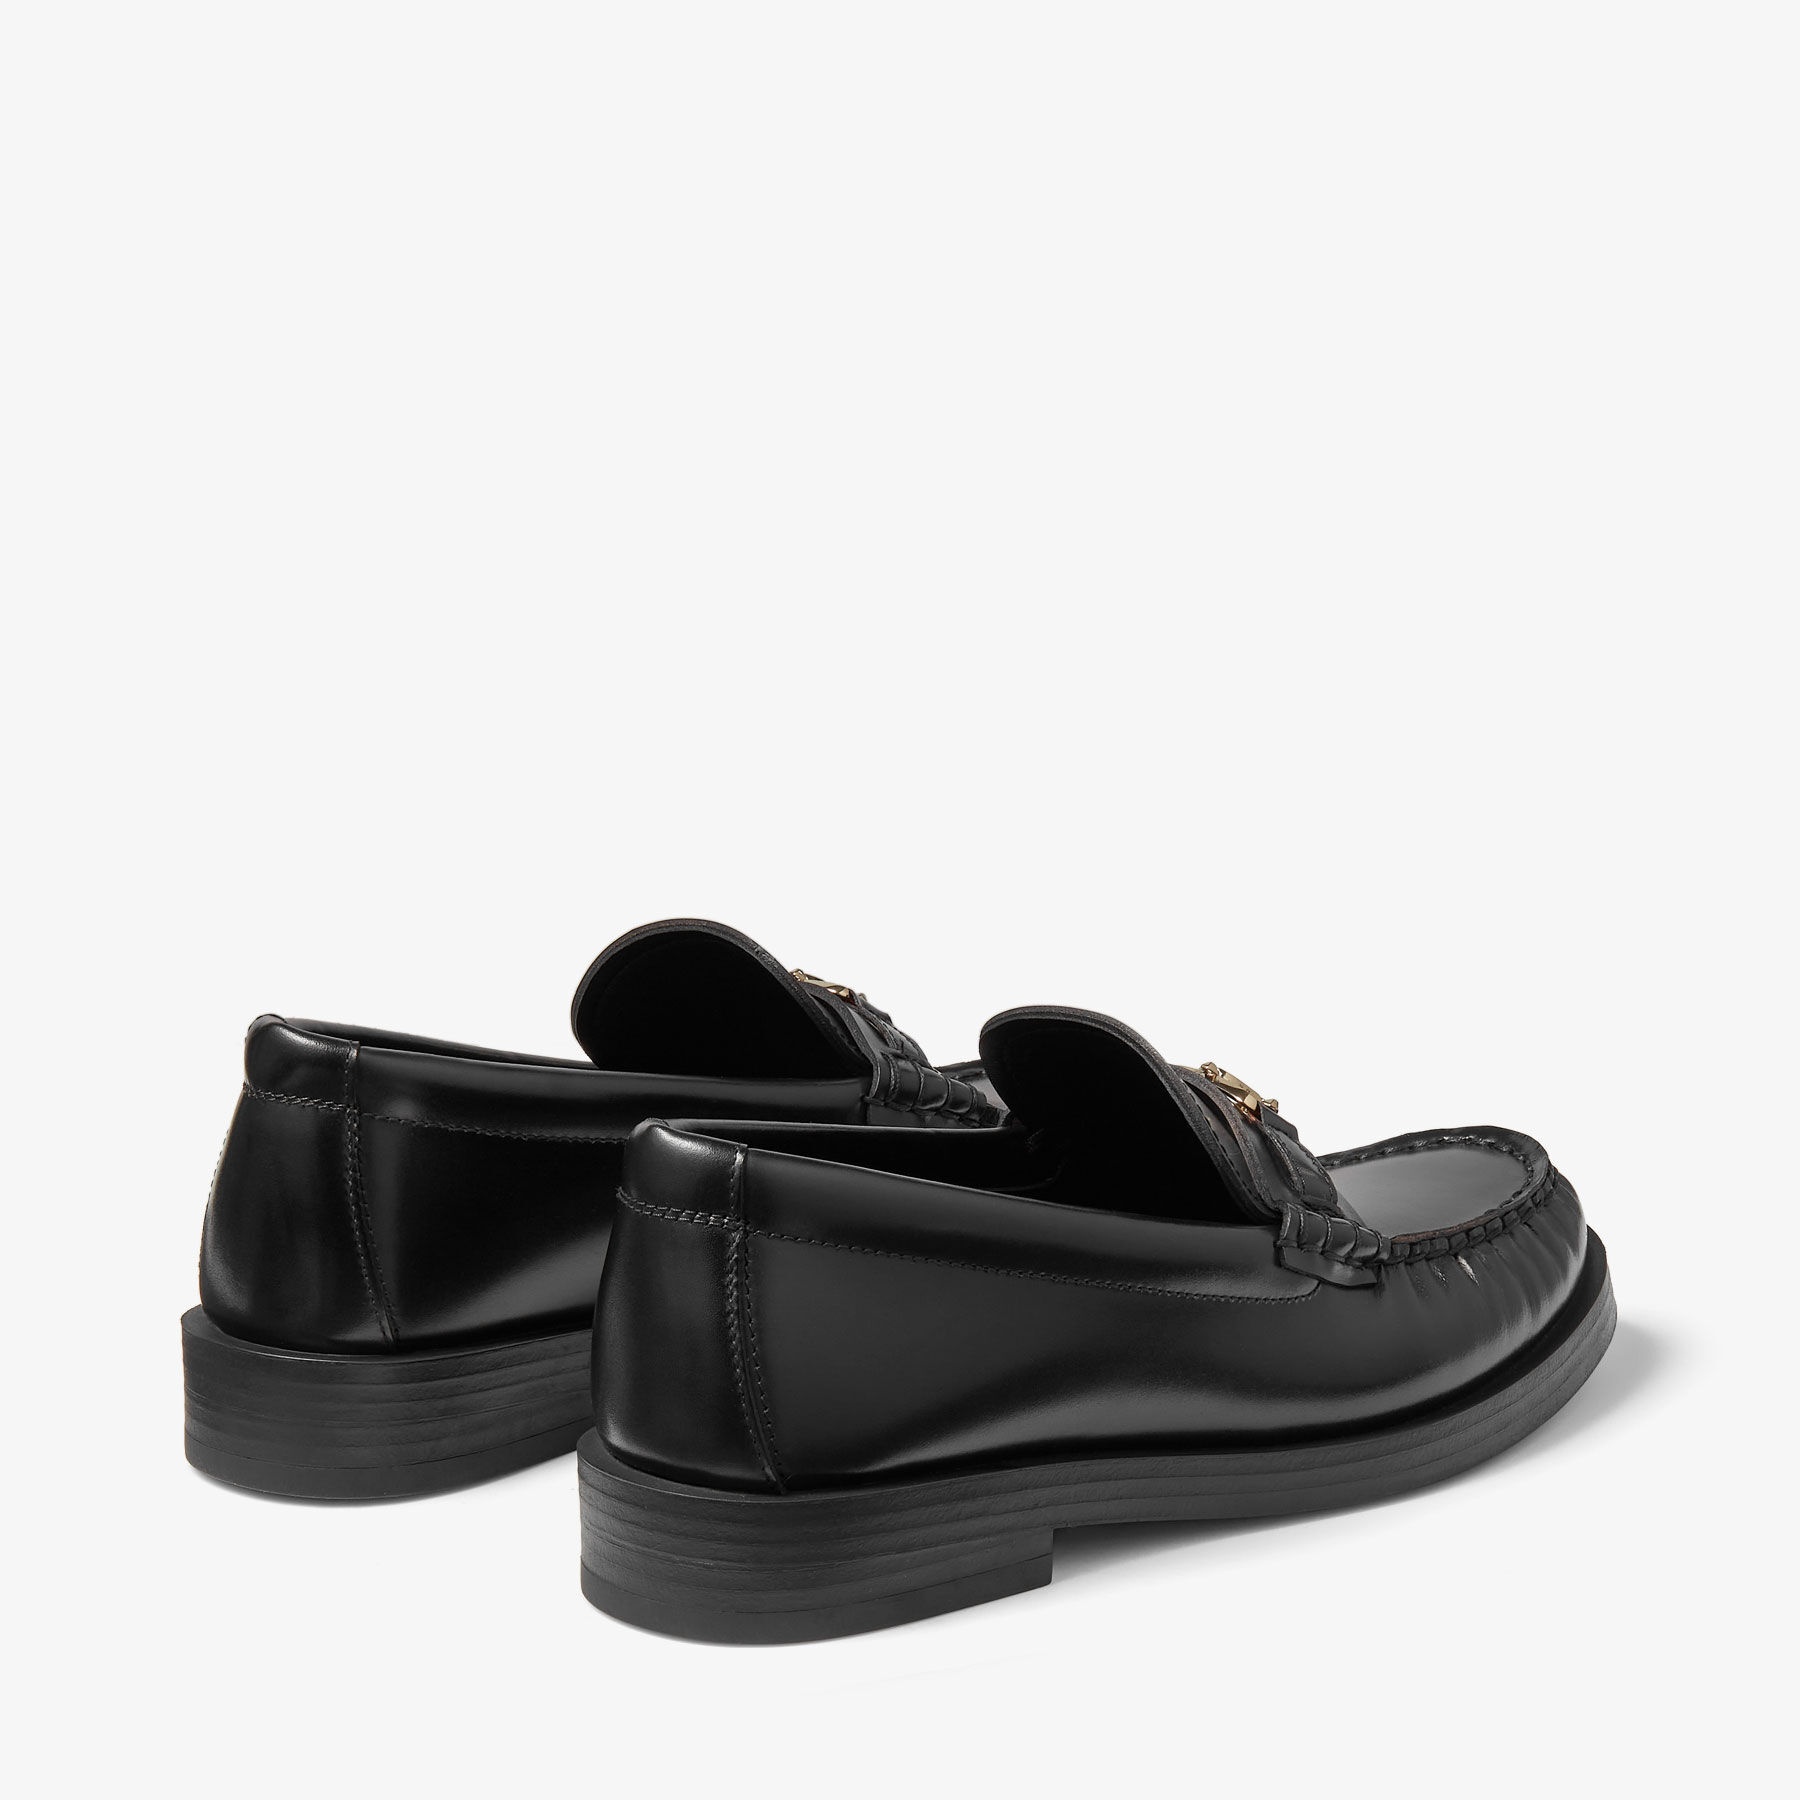 Addie/JC
Black Box Calf Leather Flat Loafers with JC Emblem - 5